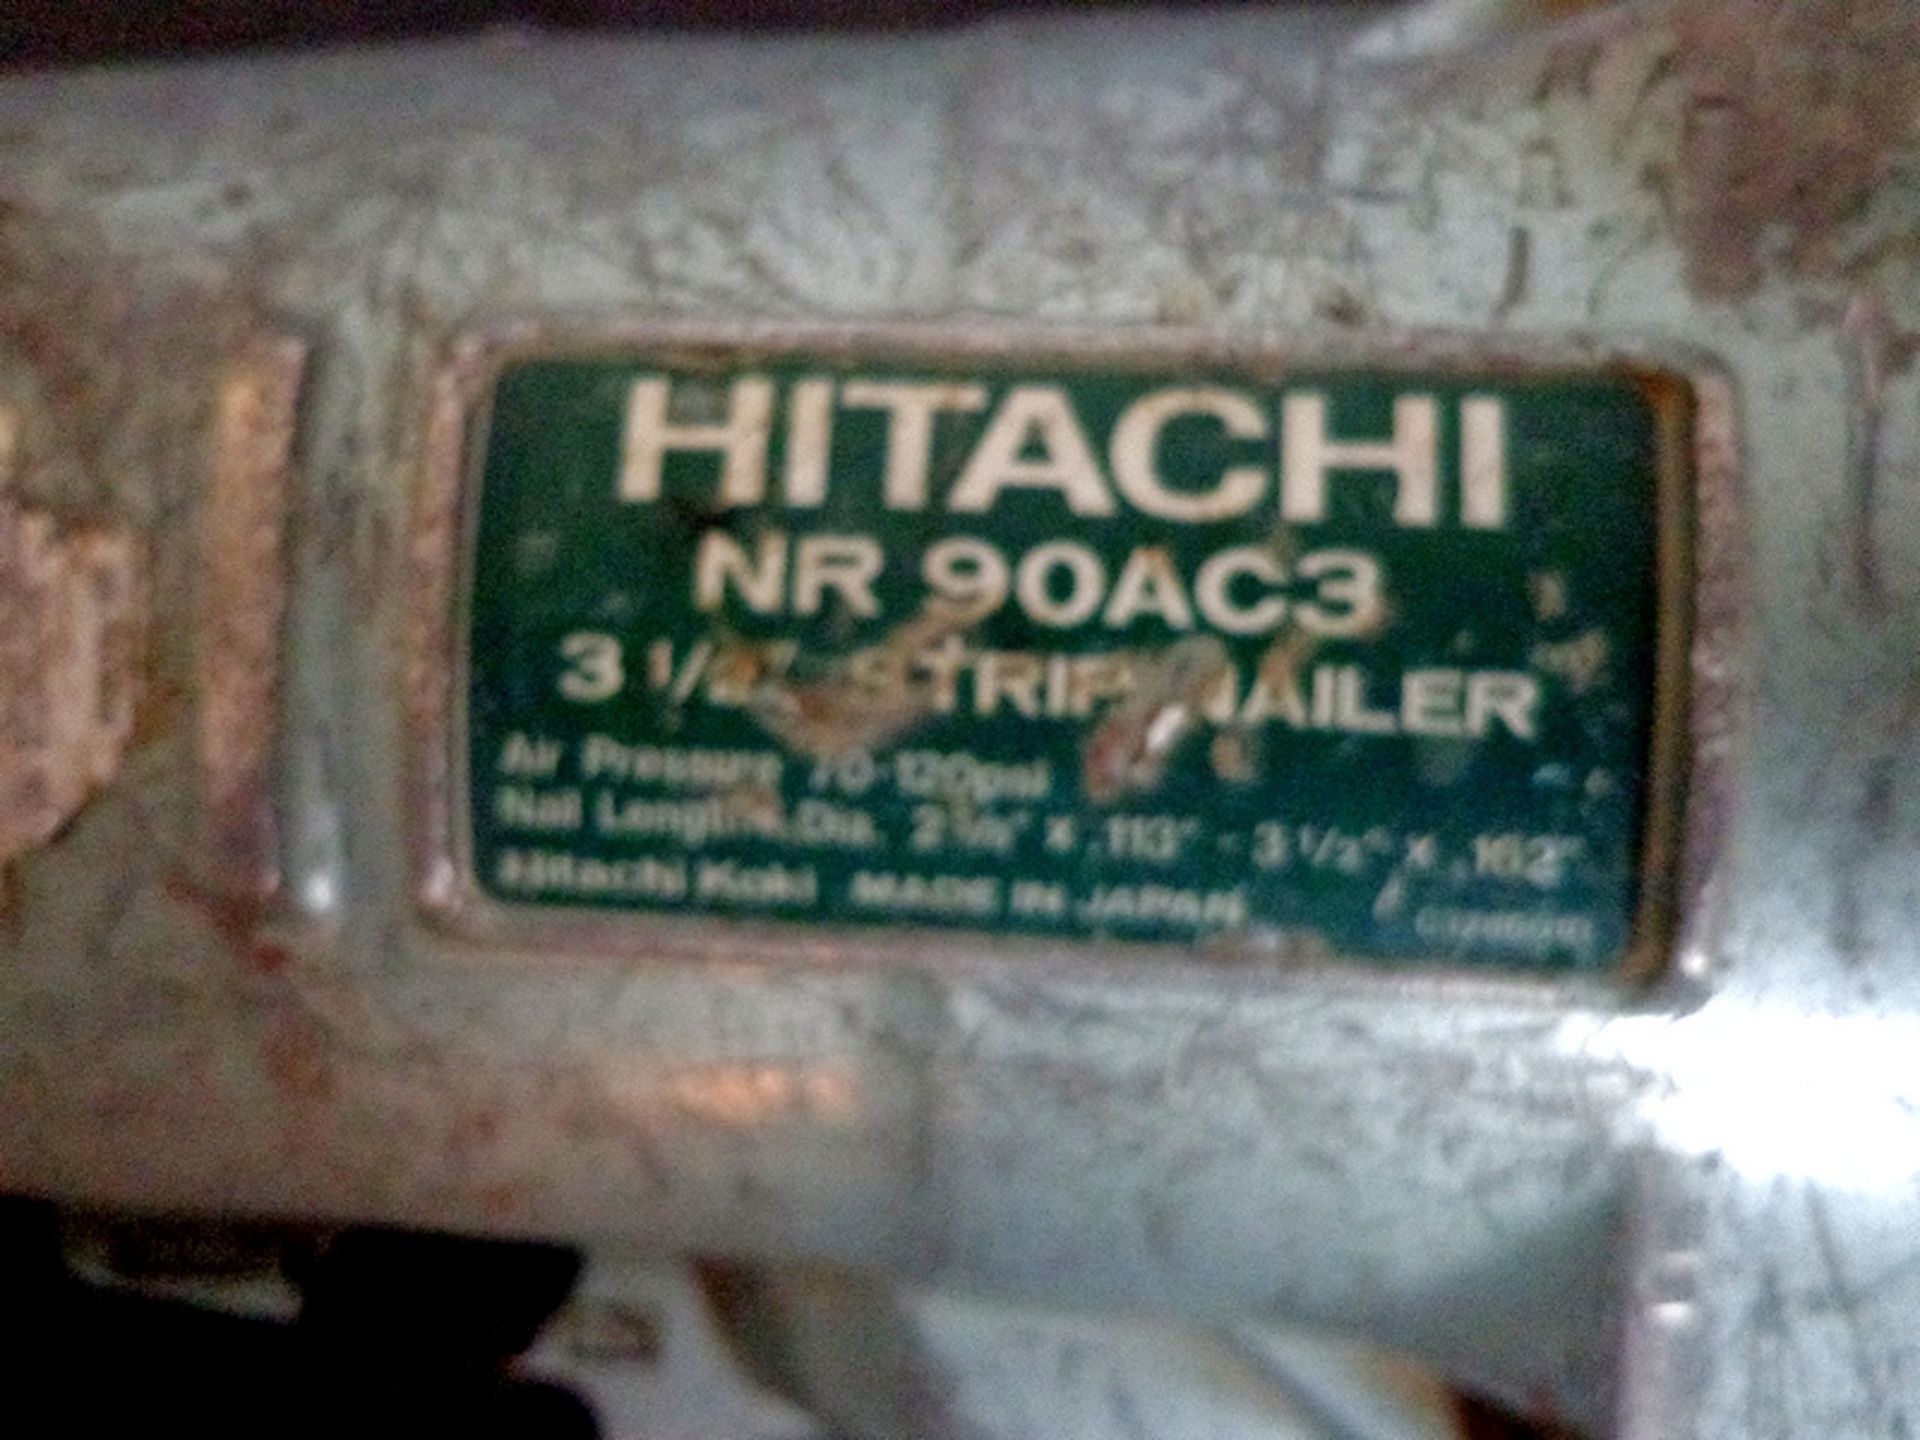 HITACHI NR 90AC3 3 1/4" STRIP NAILER - Image 2 of 2